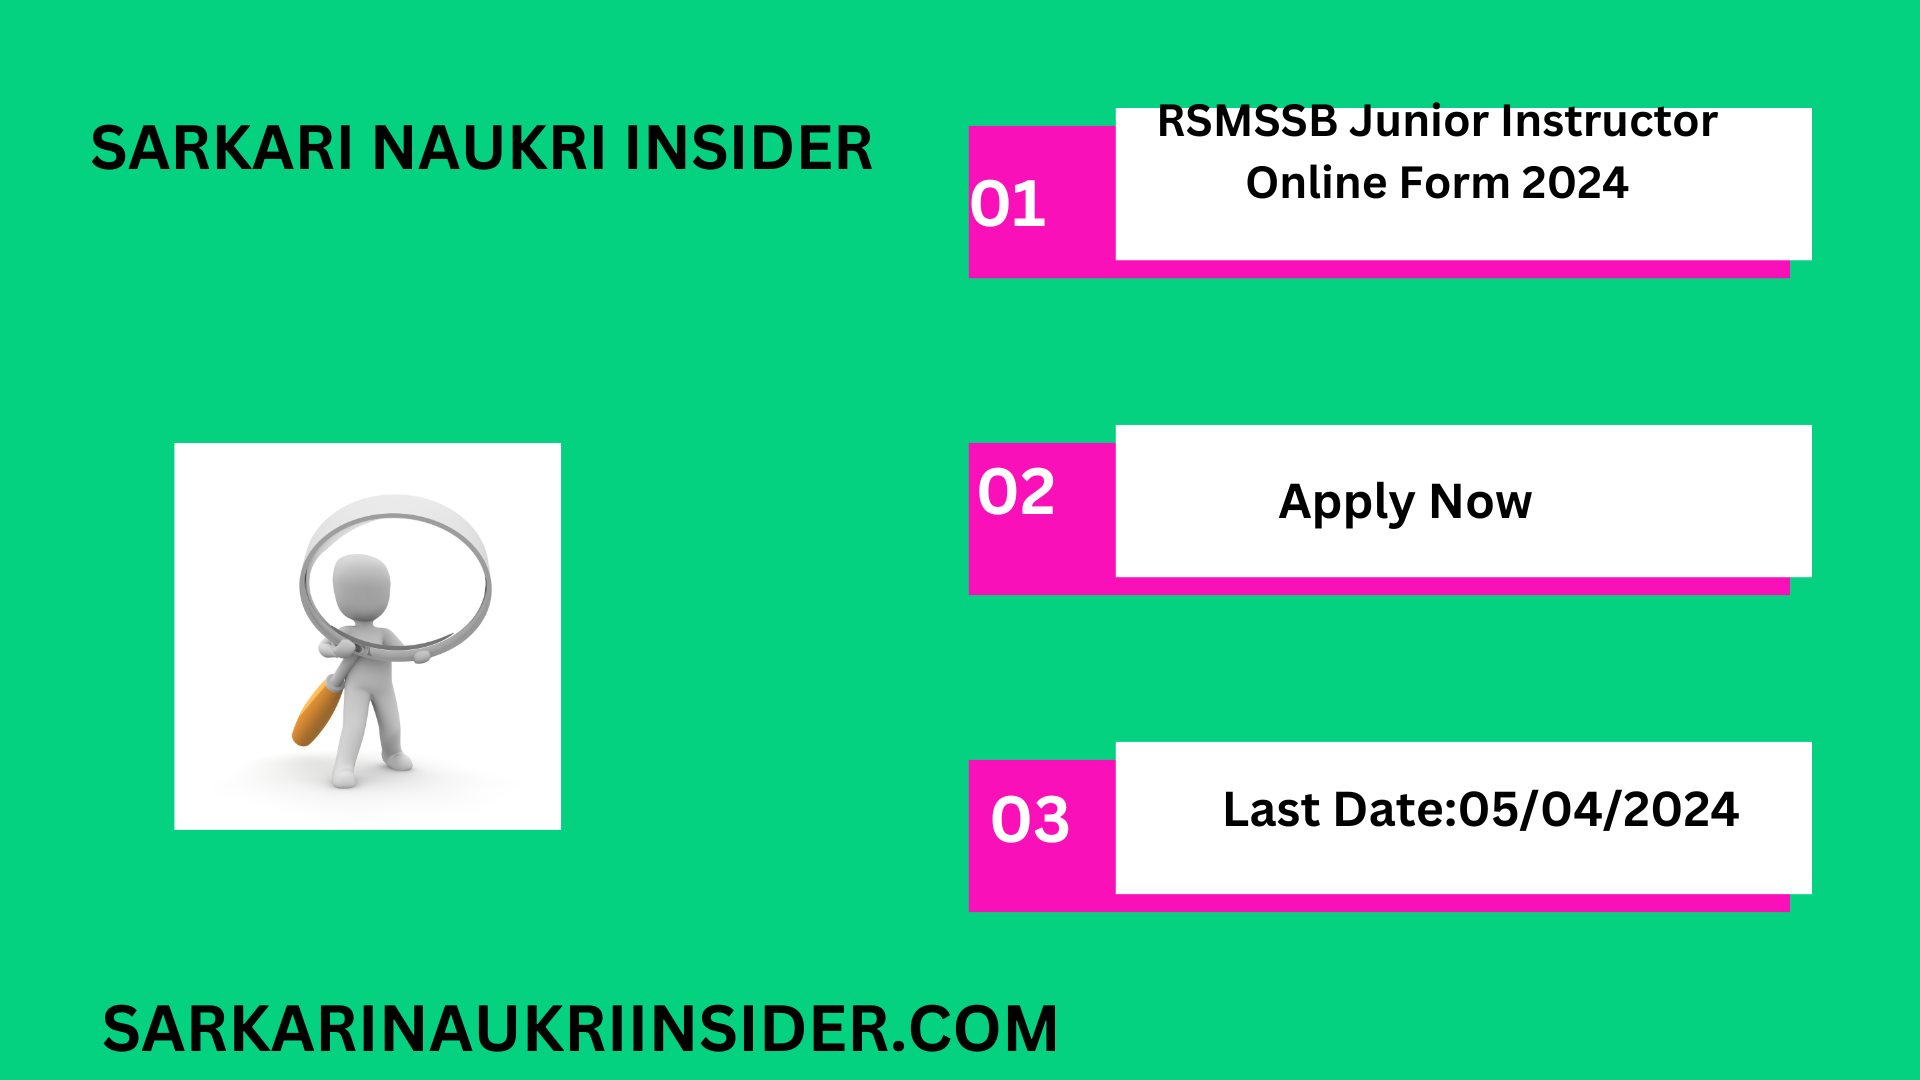 RSMSSB Junior Instructor Online Form 2024
\